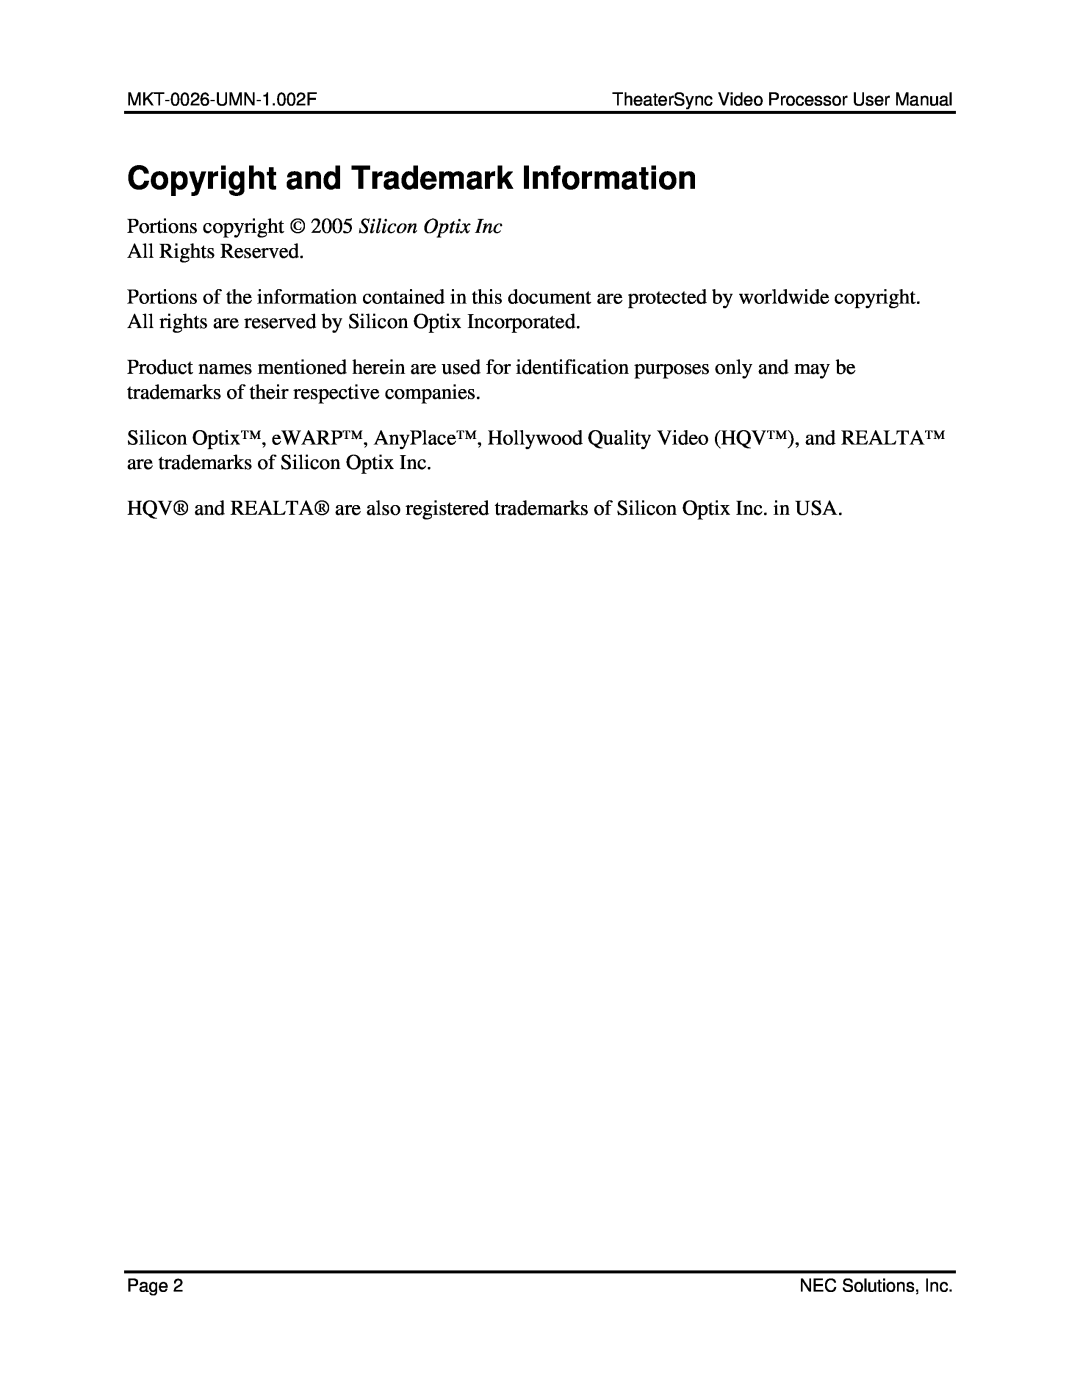 NEC TheaterSync Video Processor user manual Copyright and Trademark Information 